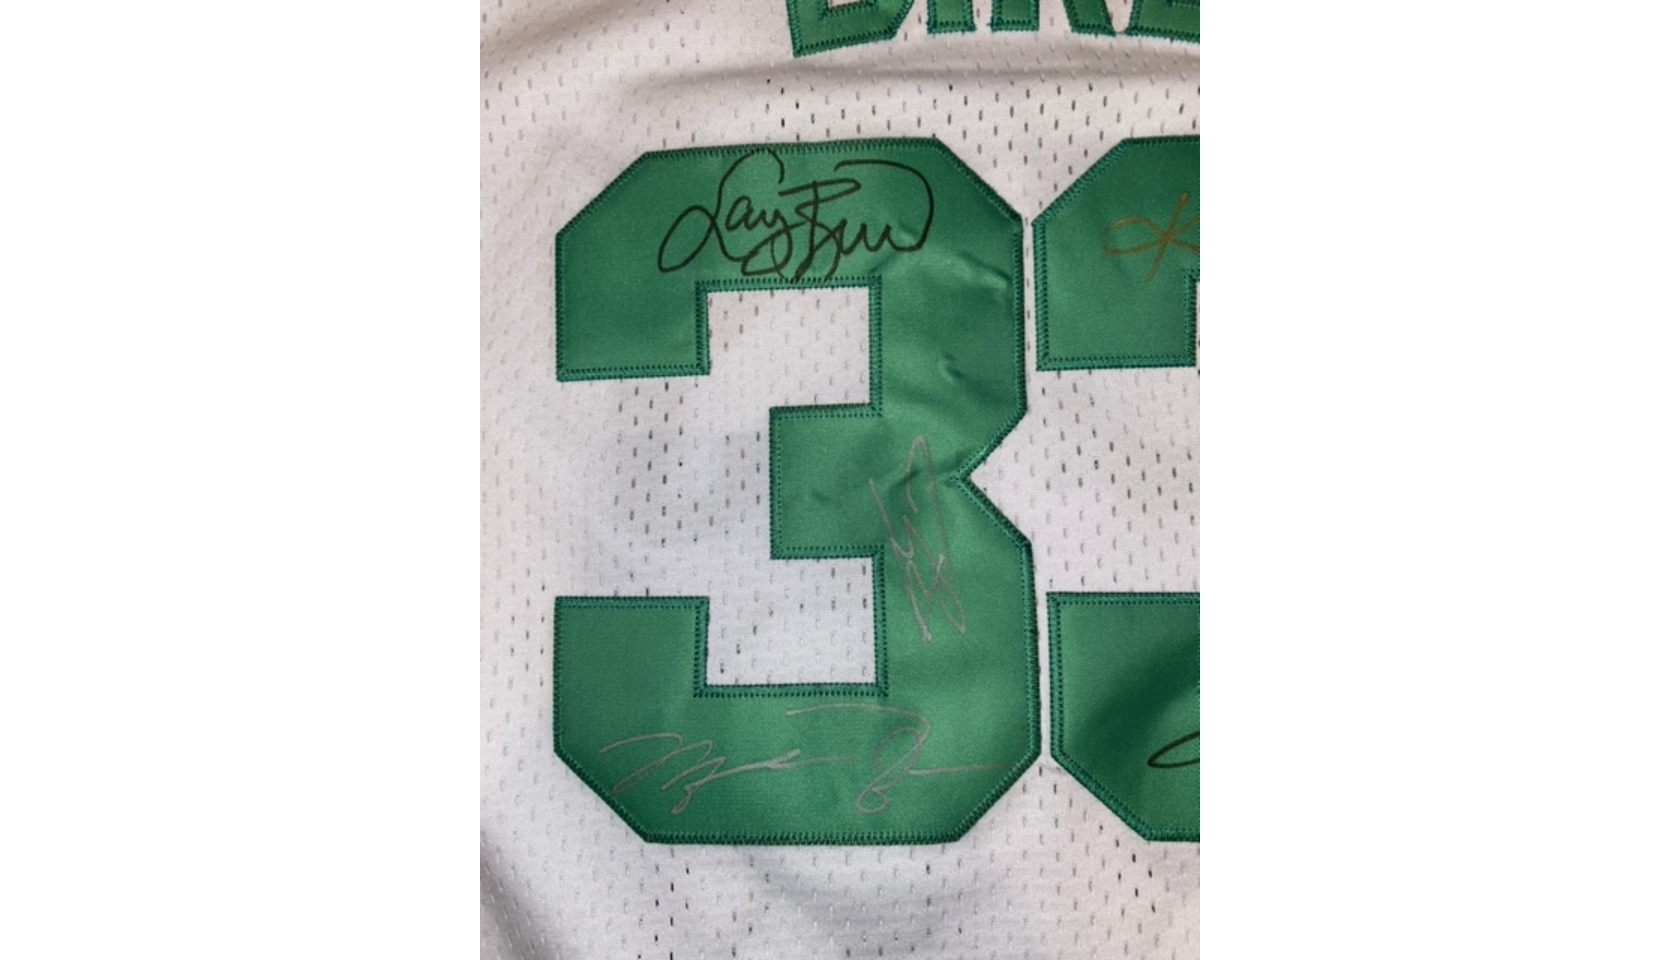 Official Replica Boston Celtics Jersey Signed by Larry Bird - CharityStars